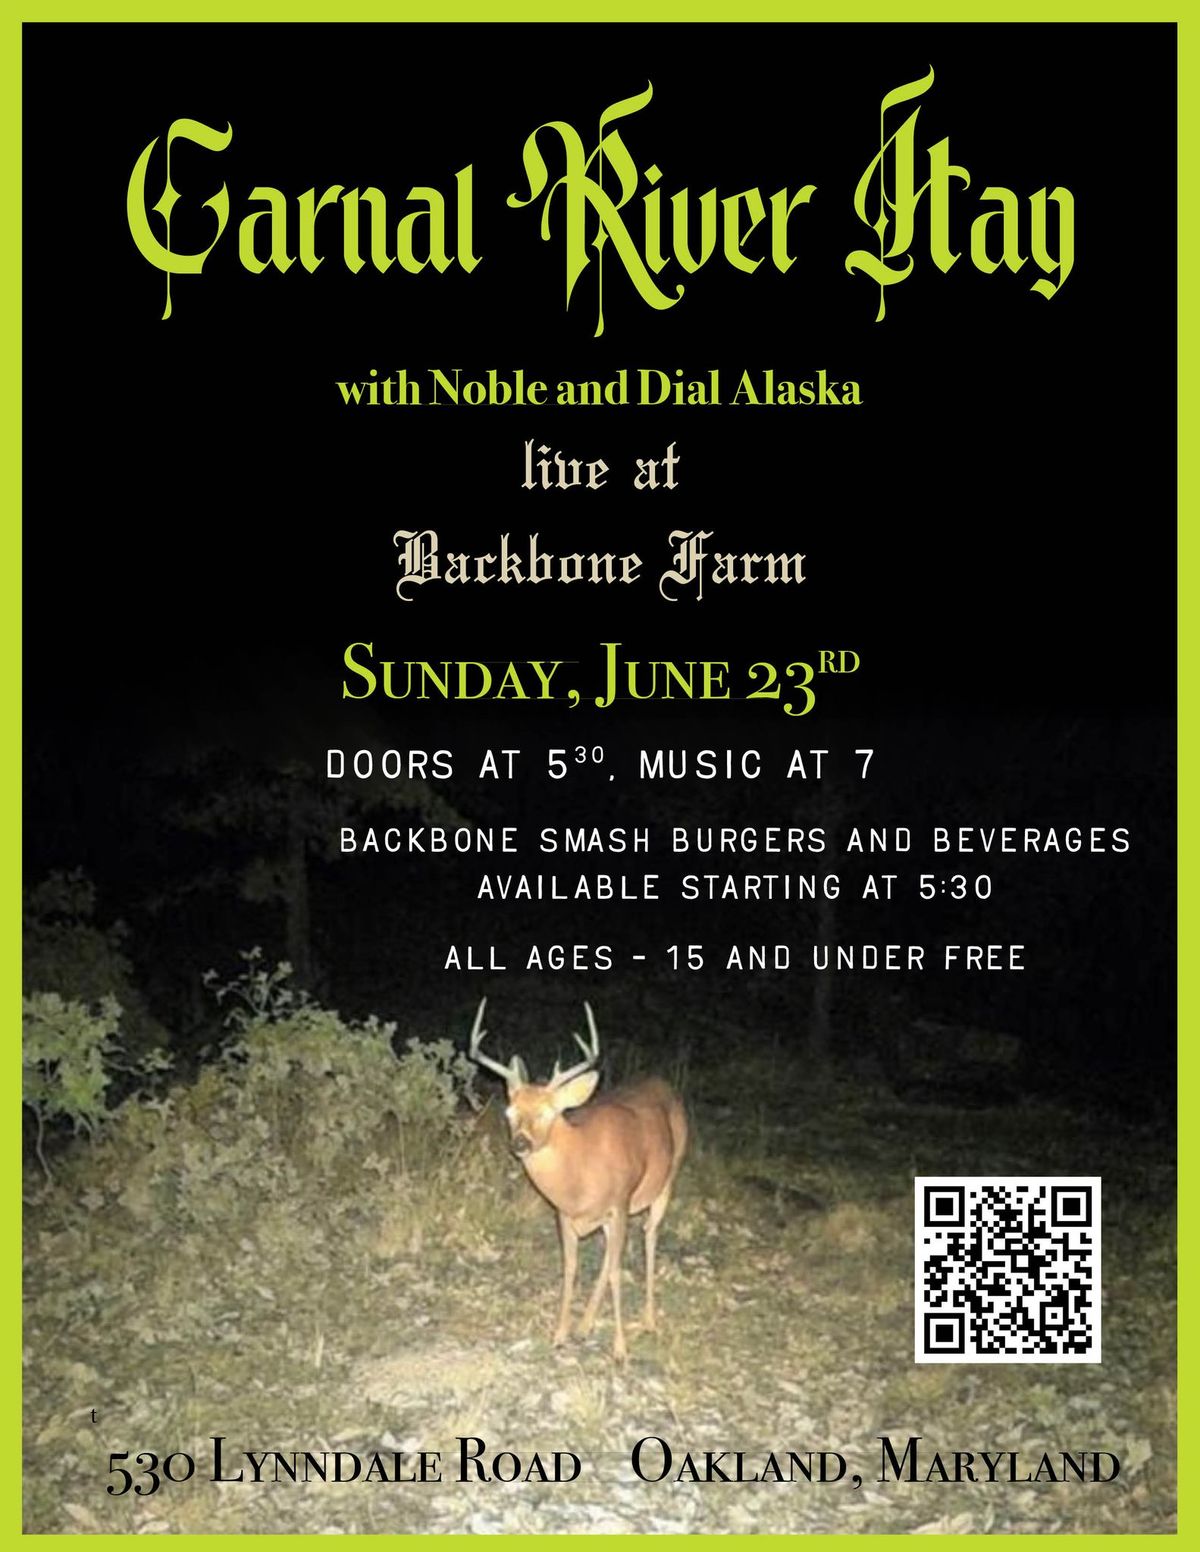 Carnal River Hag Live at Backbone Farm